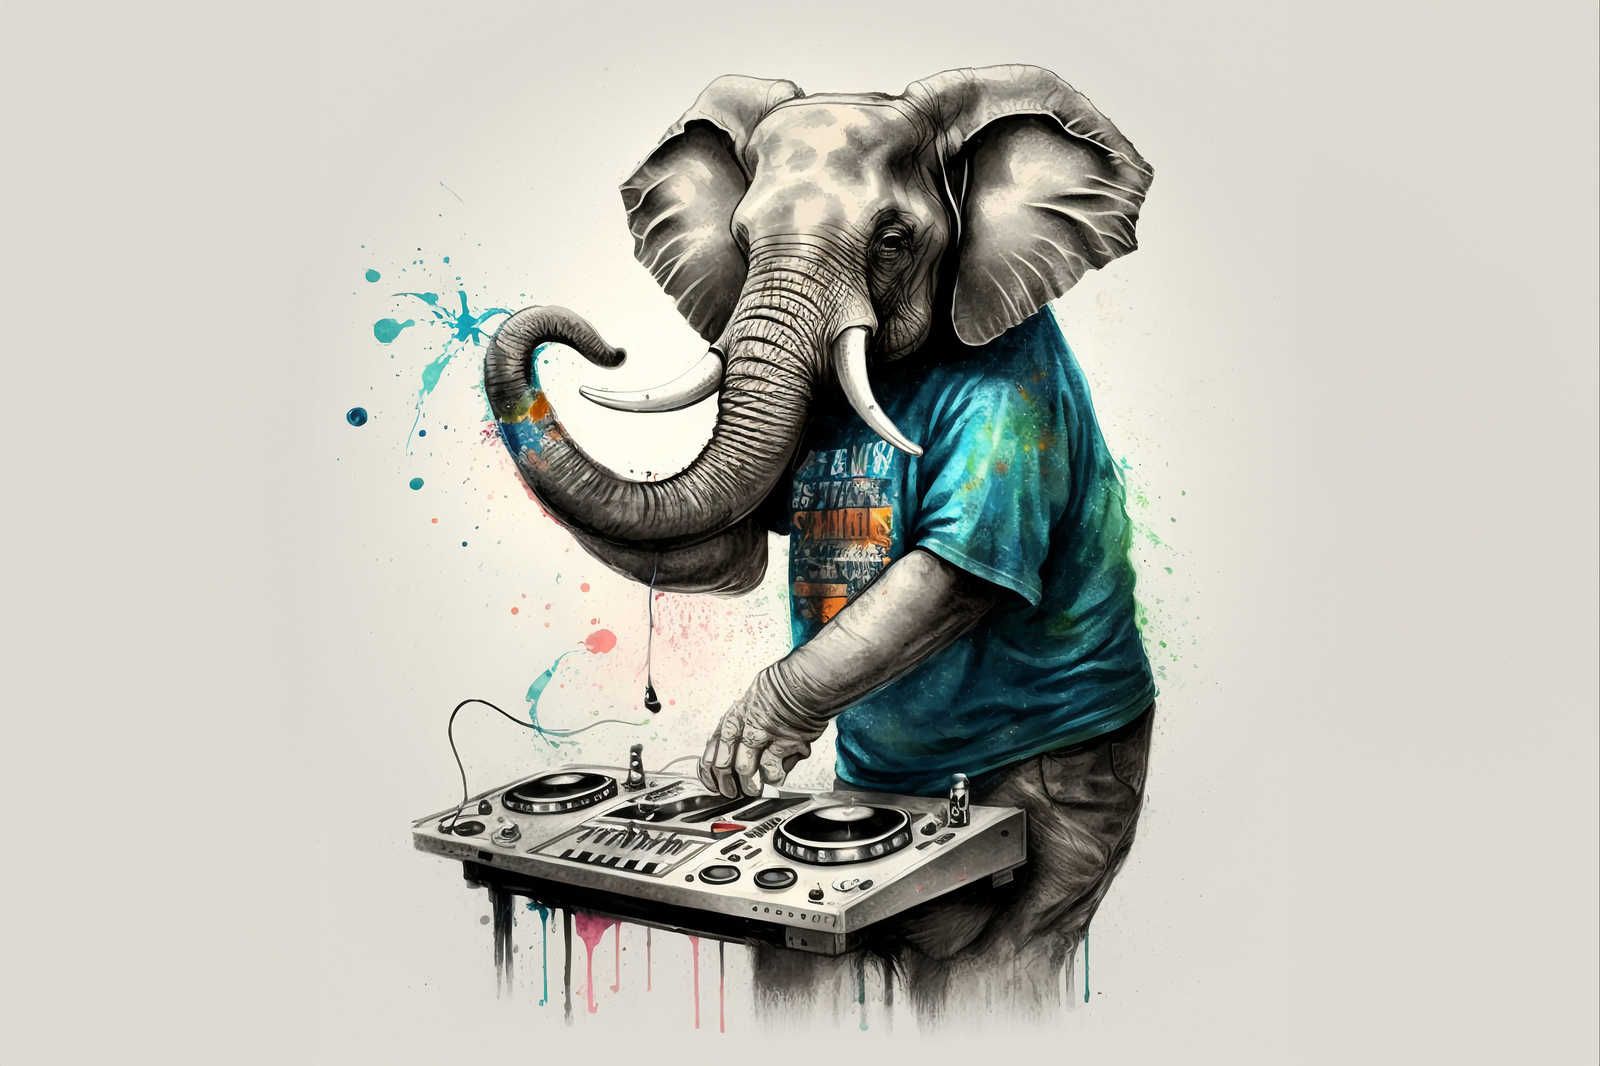             KI-Leinwandbild »elephant dj« – 120 cm x 80 cm
        